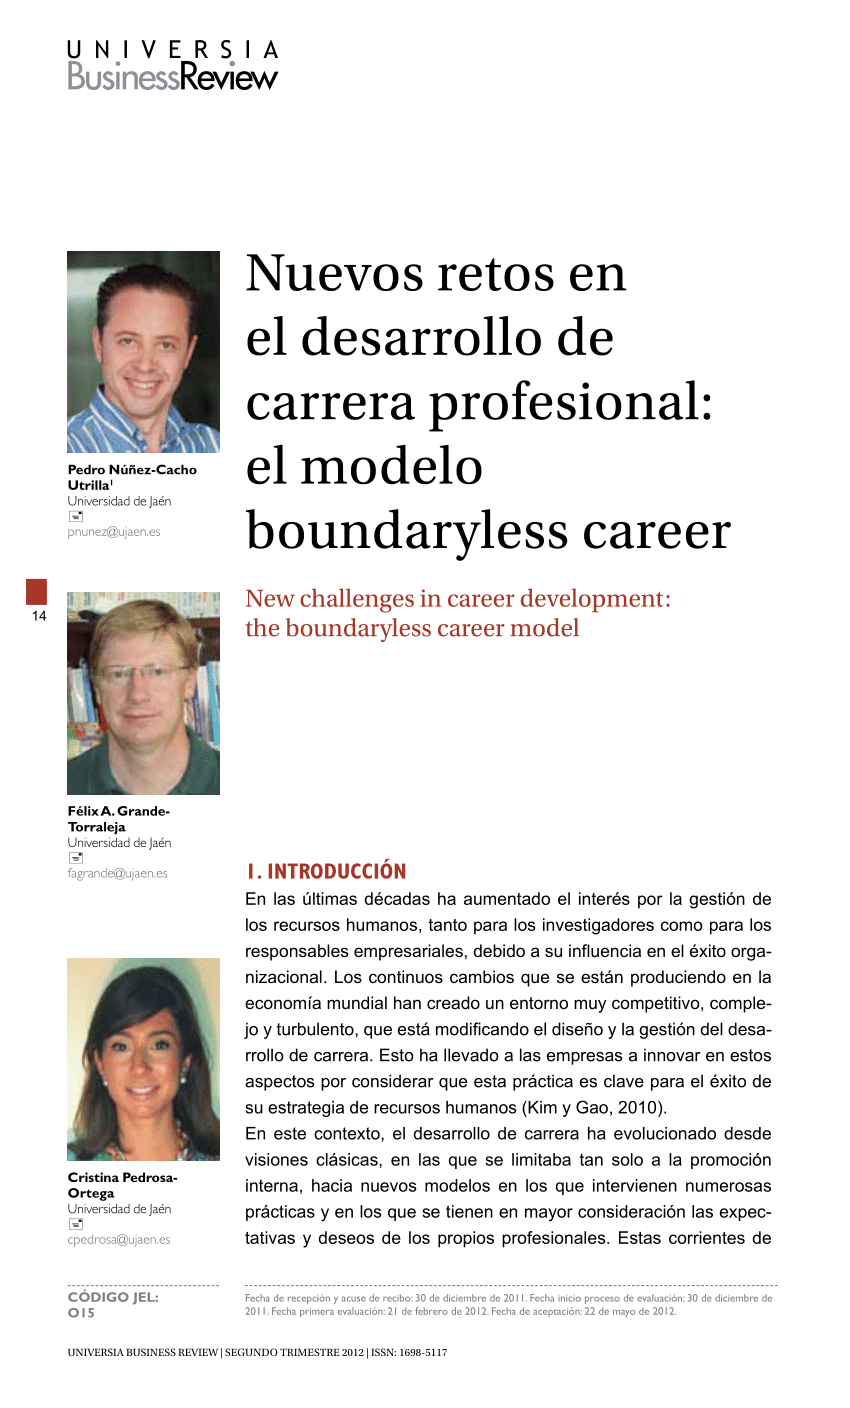 PDF) Nuevos retos en el desarrollo de carrera profesional: el modelo  boundaryless career/New challenges in career development: the boundaryless  career model